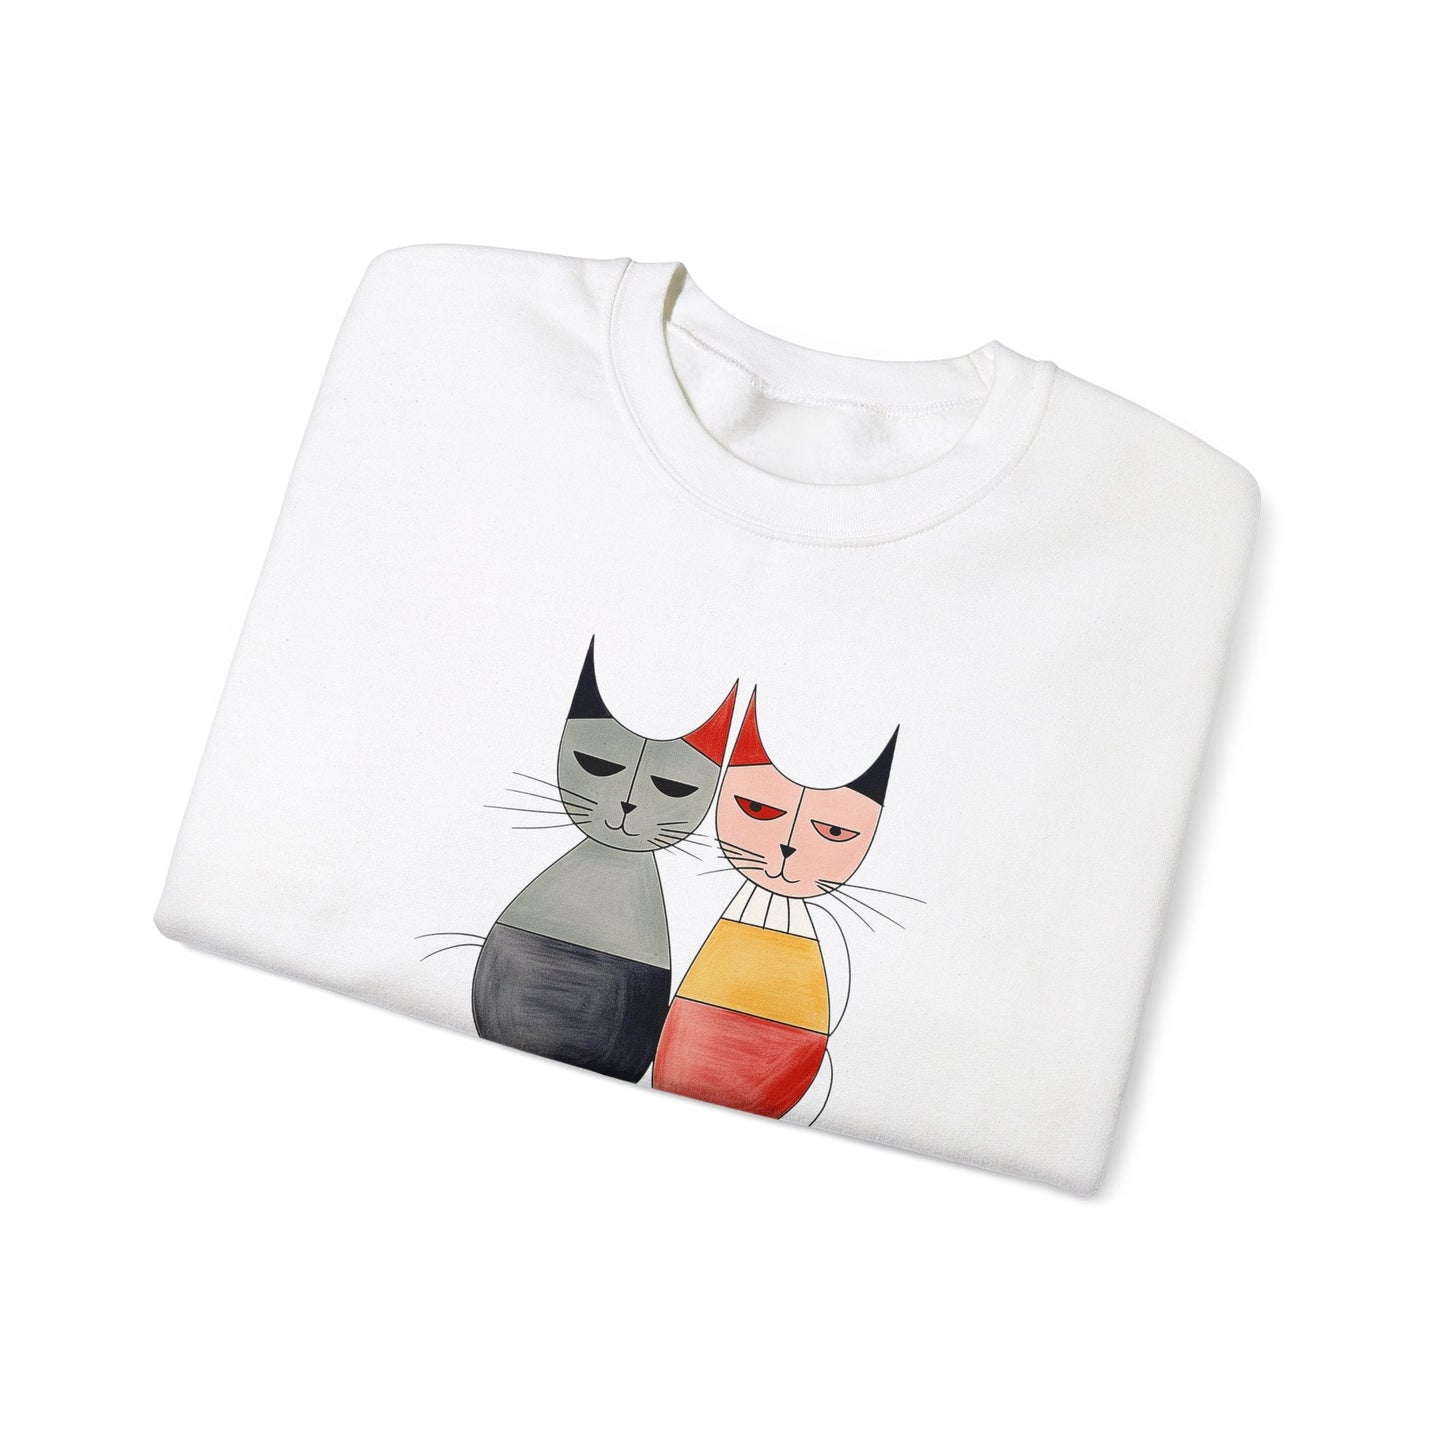 Funny Boho Cats Sweatshirt, Mid Century Modern Atomic Cat Styling Design - FlooredByArt